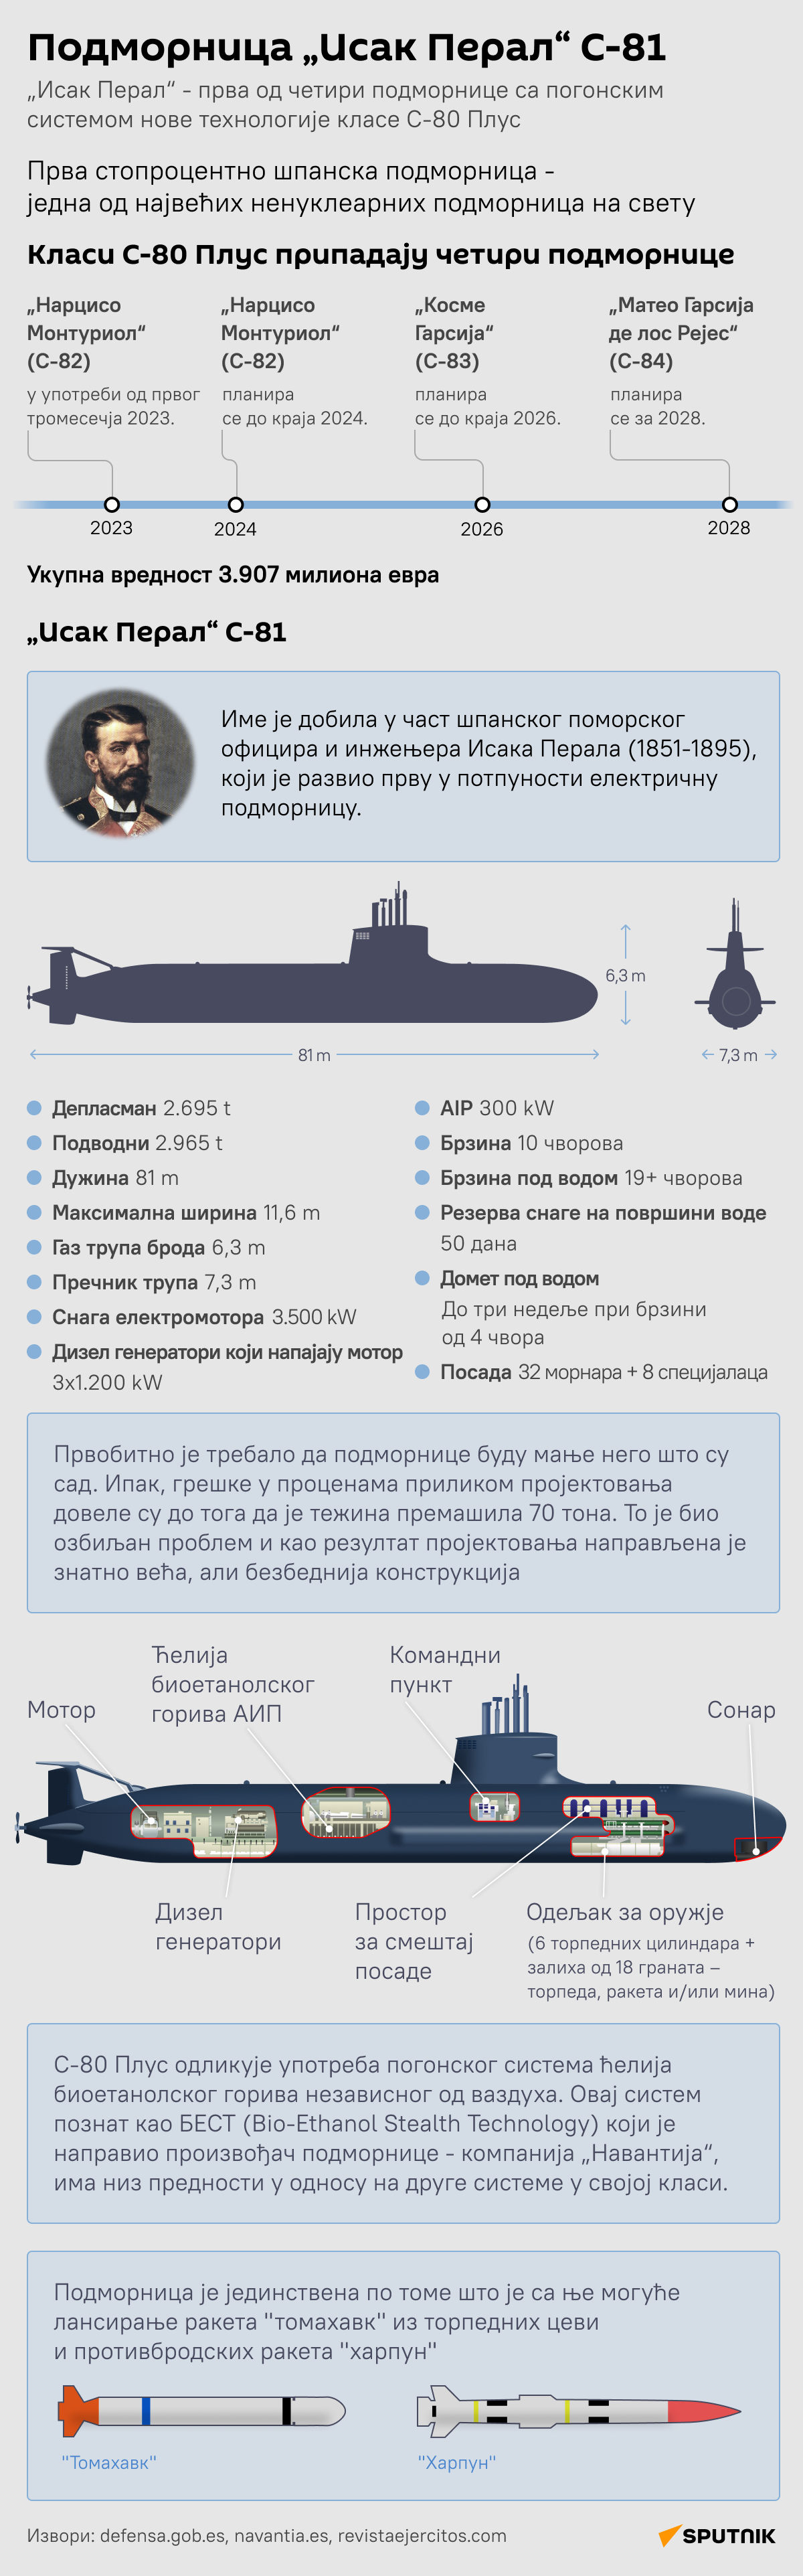 Инфографика шпанска подморница „Исак Перал“  Ћирилица деск - Sputnik Србија